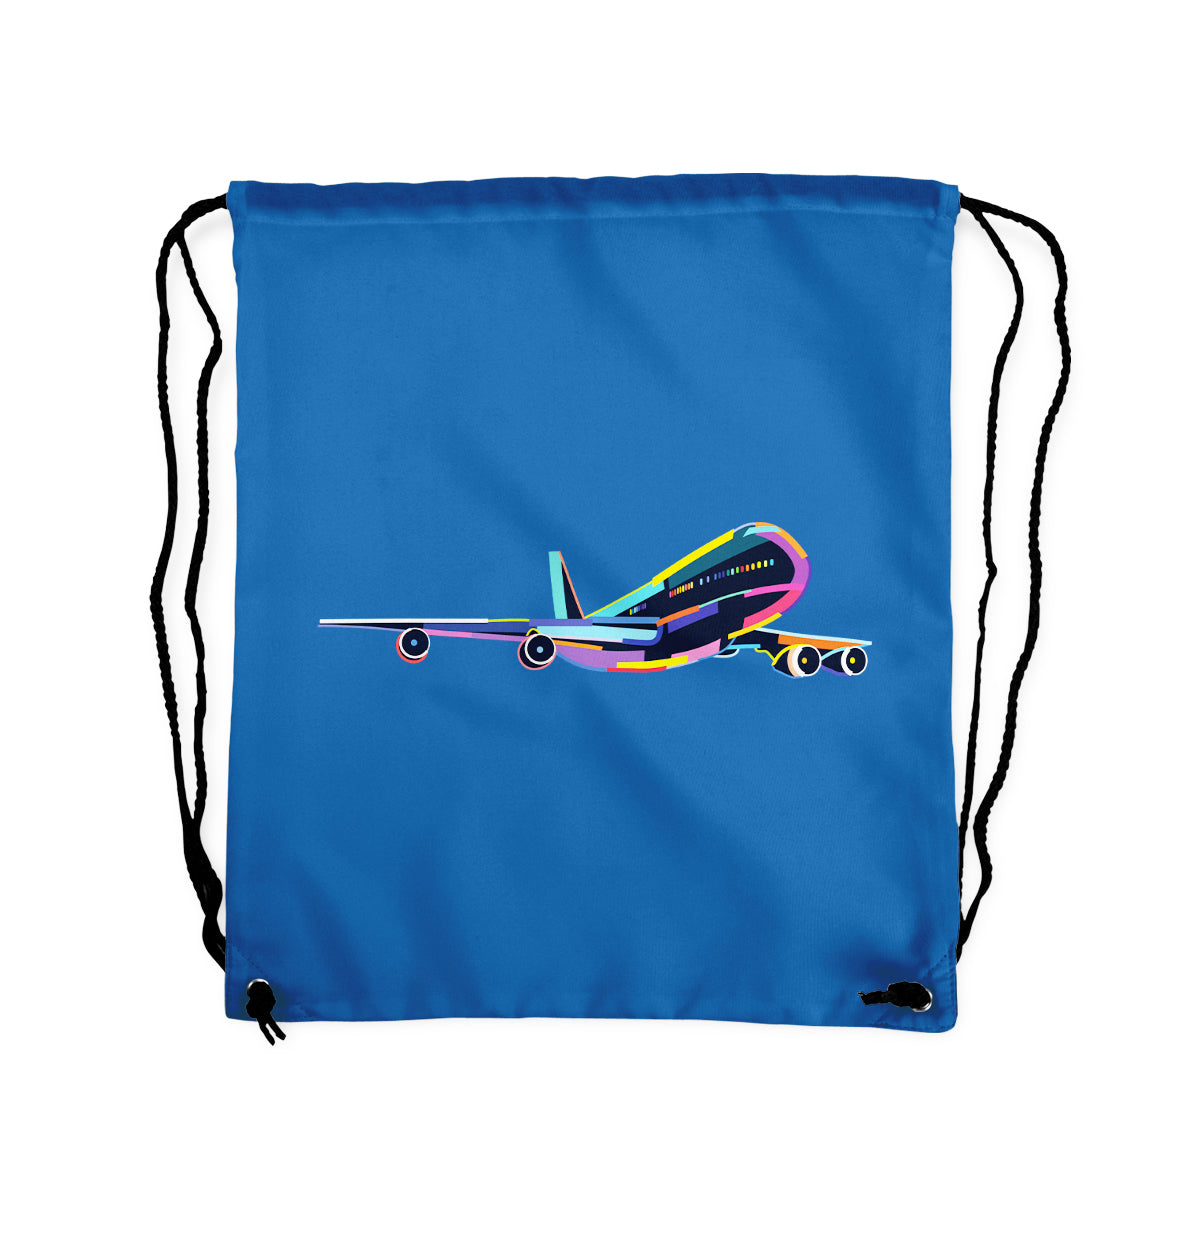 Multicolor Airplane Designed Drawstring Bags